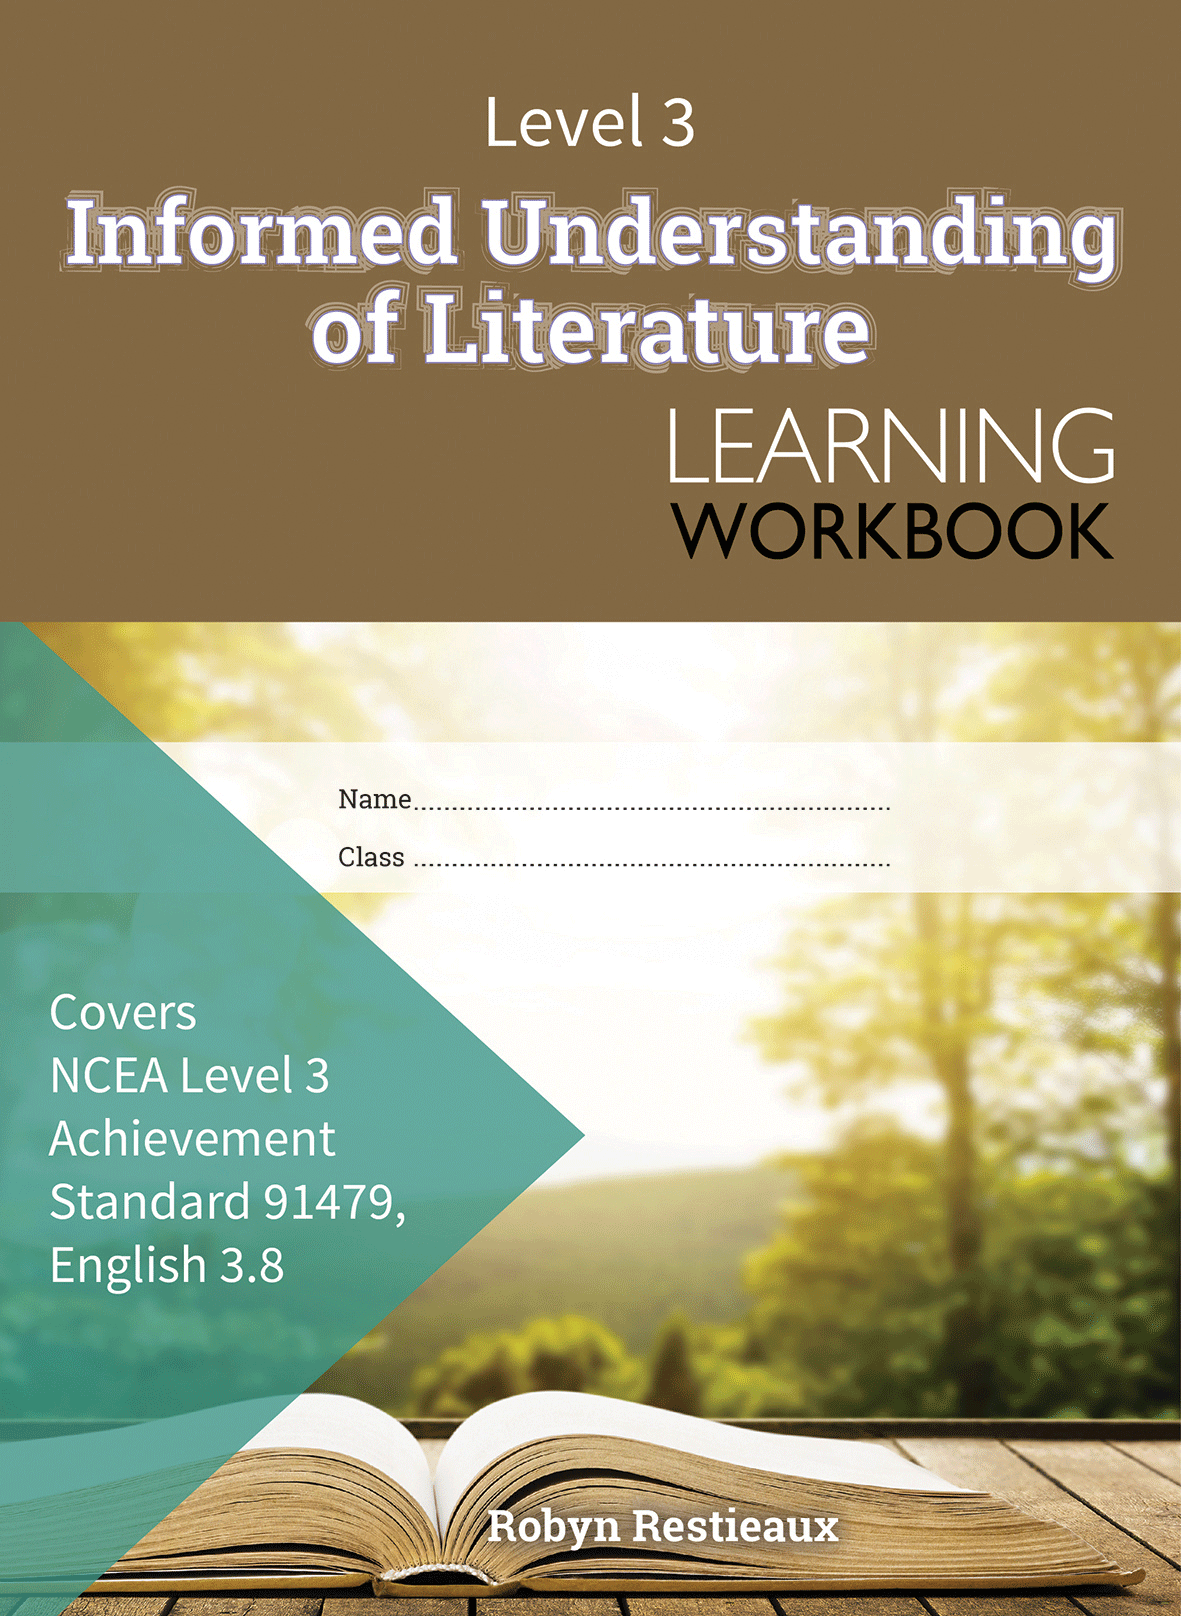 Level 3 Informed Understanding of Literature 3.8 Learning Workbook